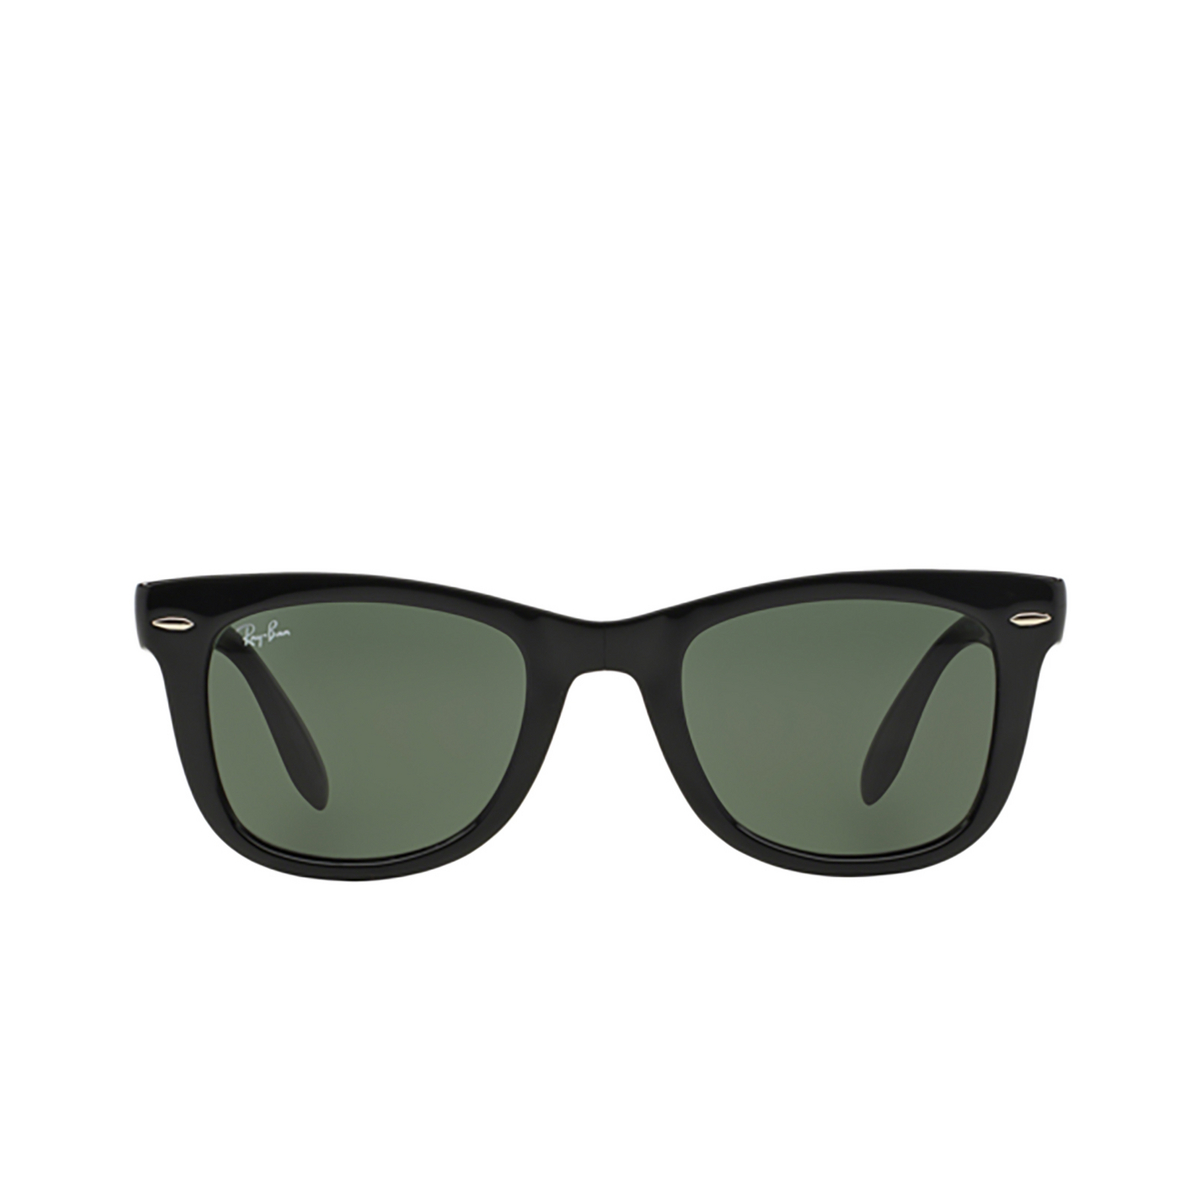 Ray-Ban FOLDING WAYFARER Sunglasses 601 BLACK - front view